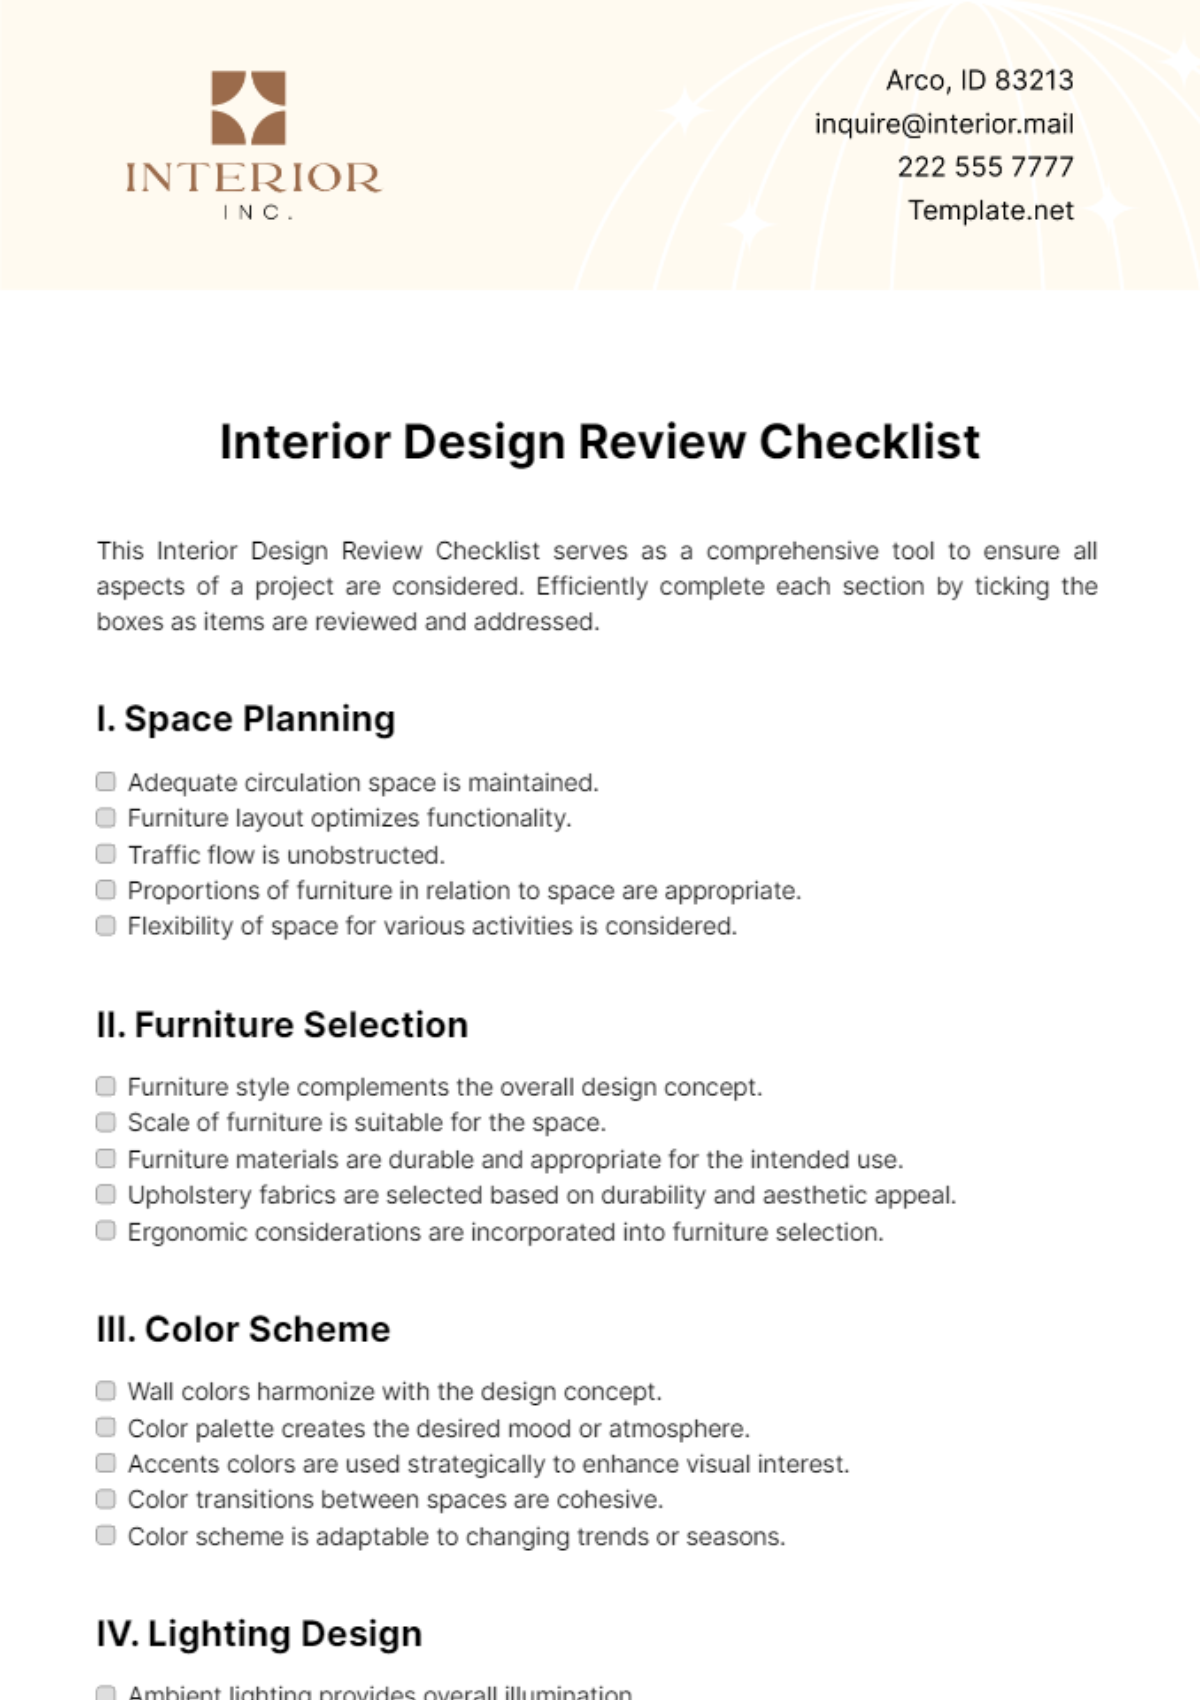 Interior Design Review Checklist Template